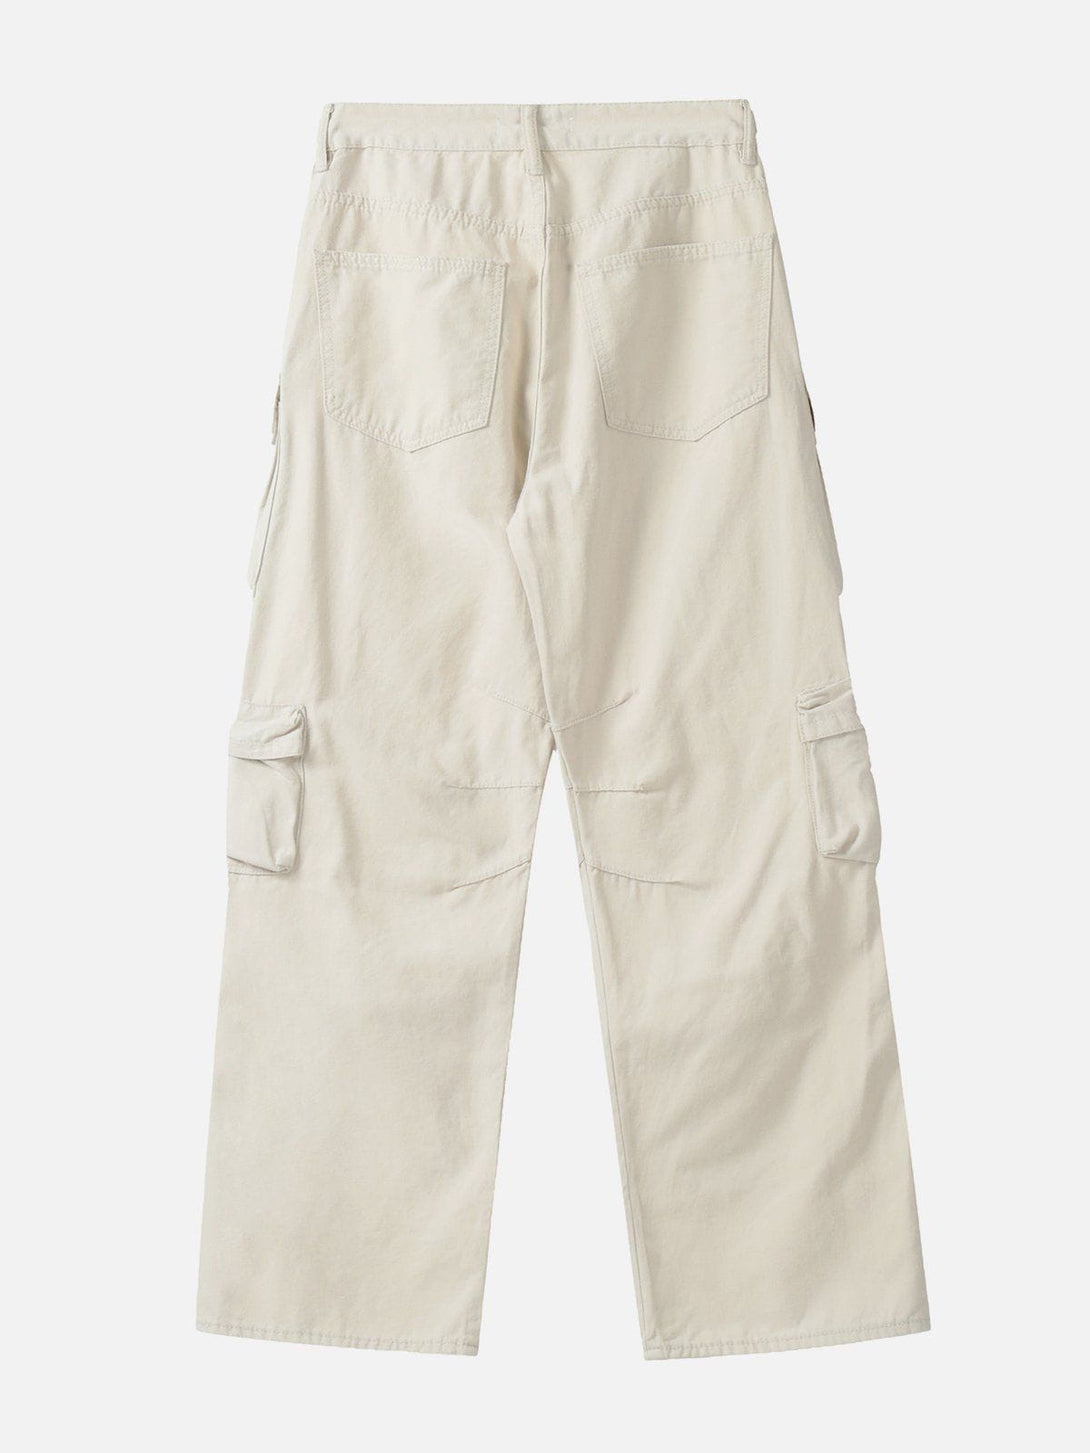 Levefly - Vintage Multi-pocket Cargo Pants - Streetwear Fashion - levefly.com